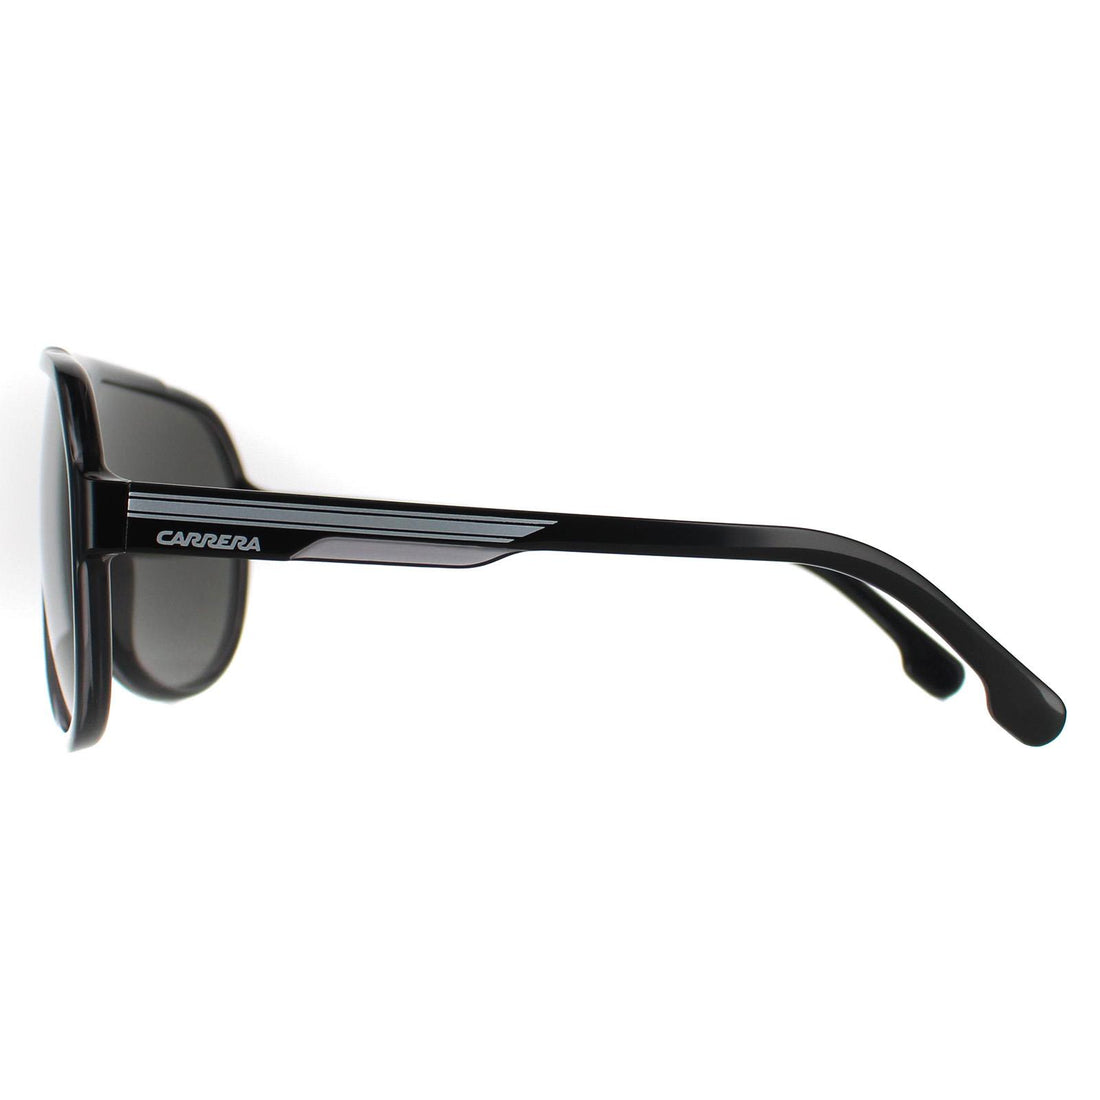 Carrera Sunglasses 1057/S 08A M9 Black Grey Grey – Discounted Sunglasses